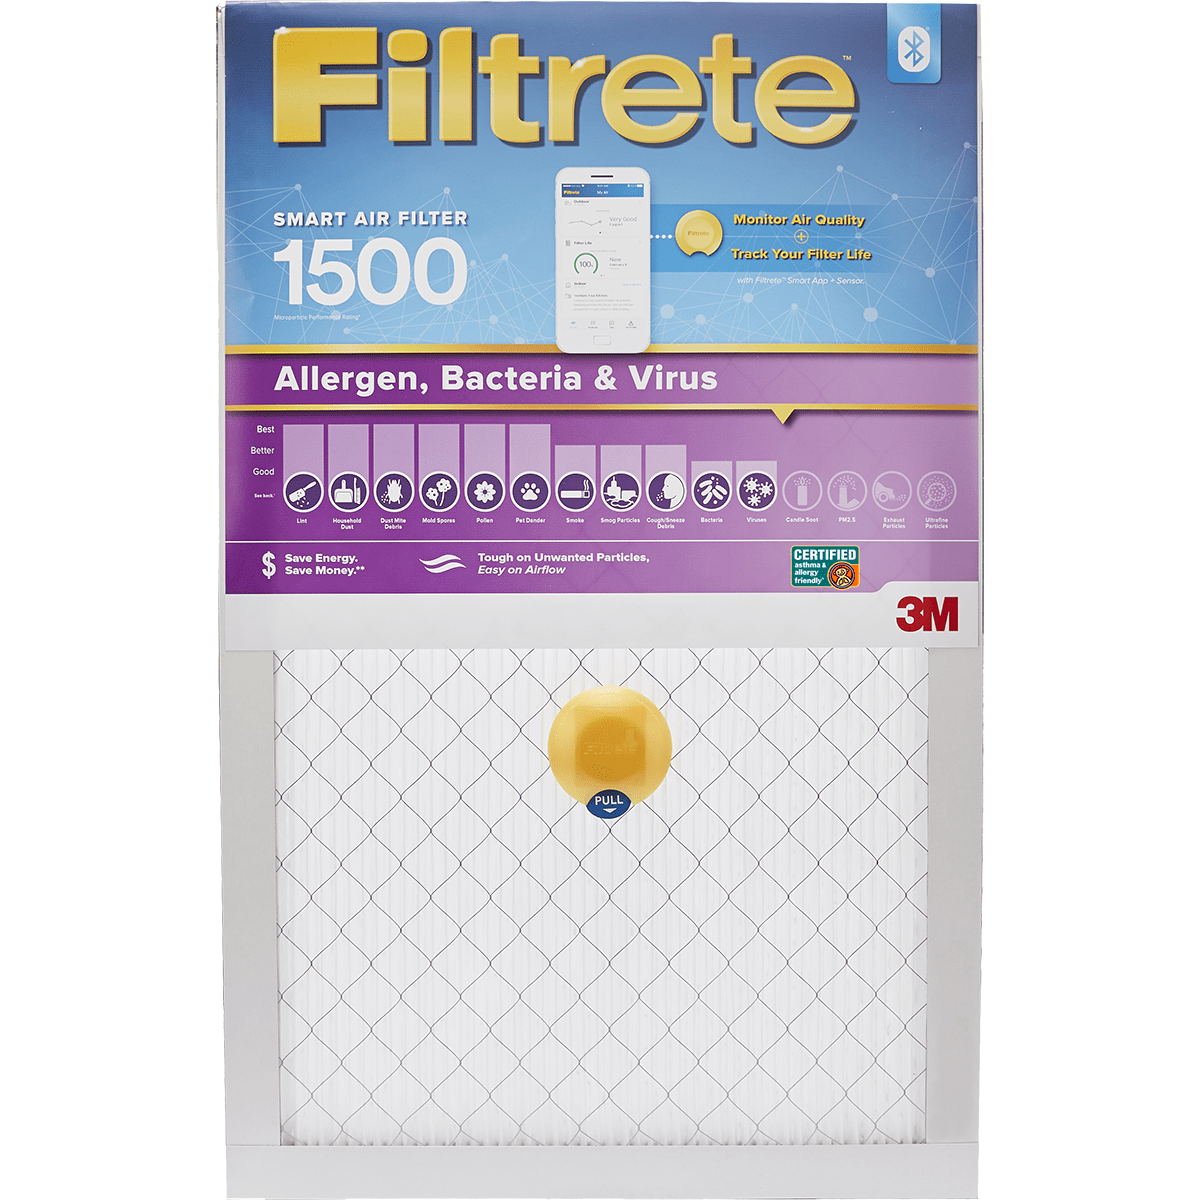 3m Filtrete 1500 Mpr Allergen, Bacteria & Virus Smart Air Filter